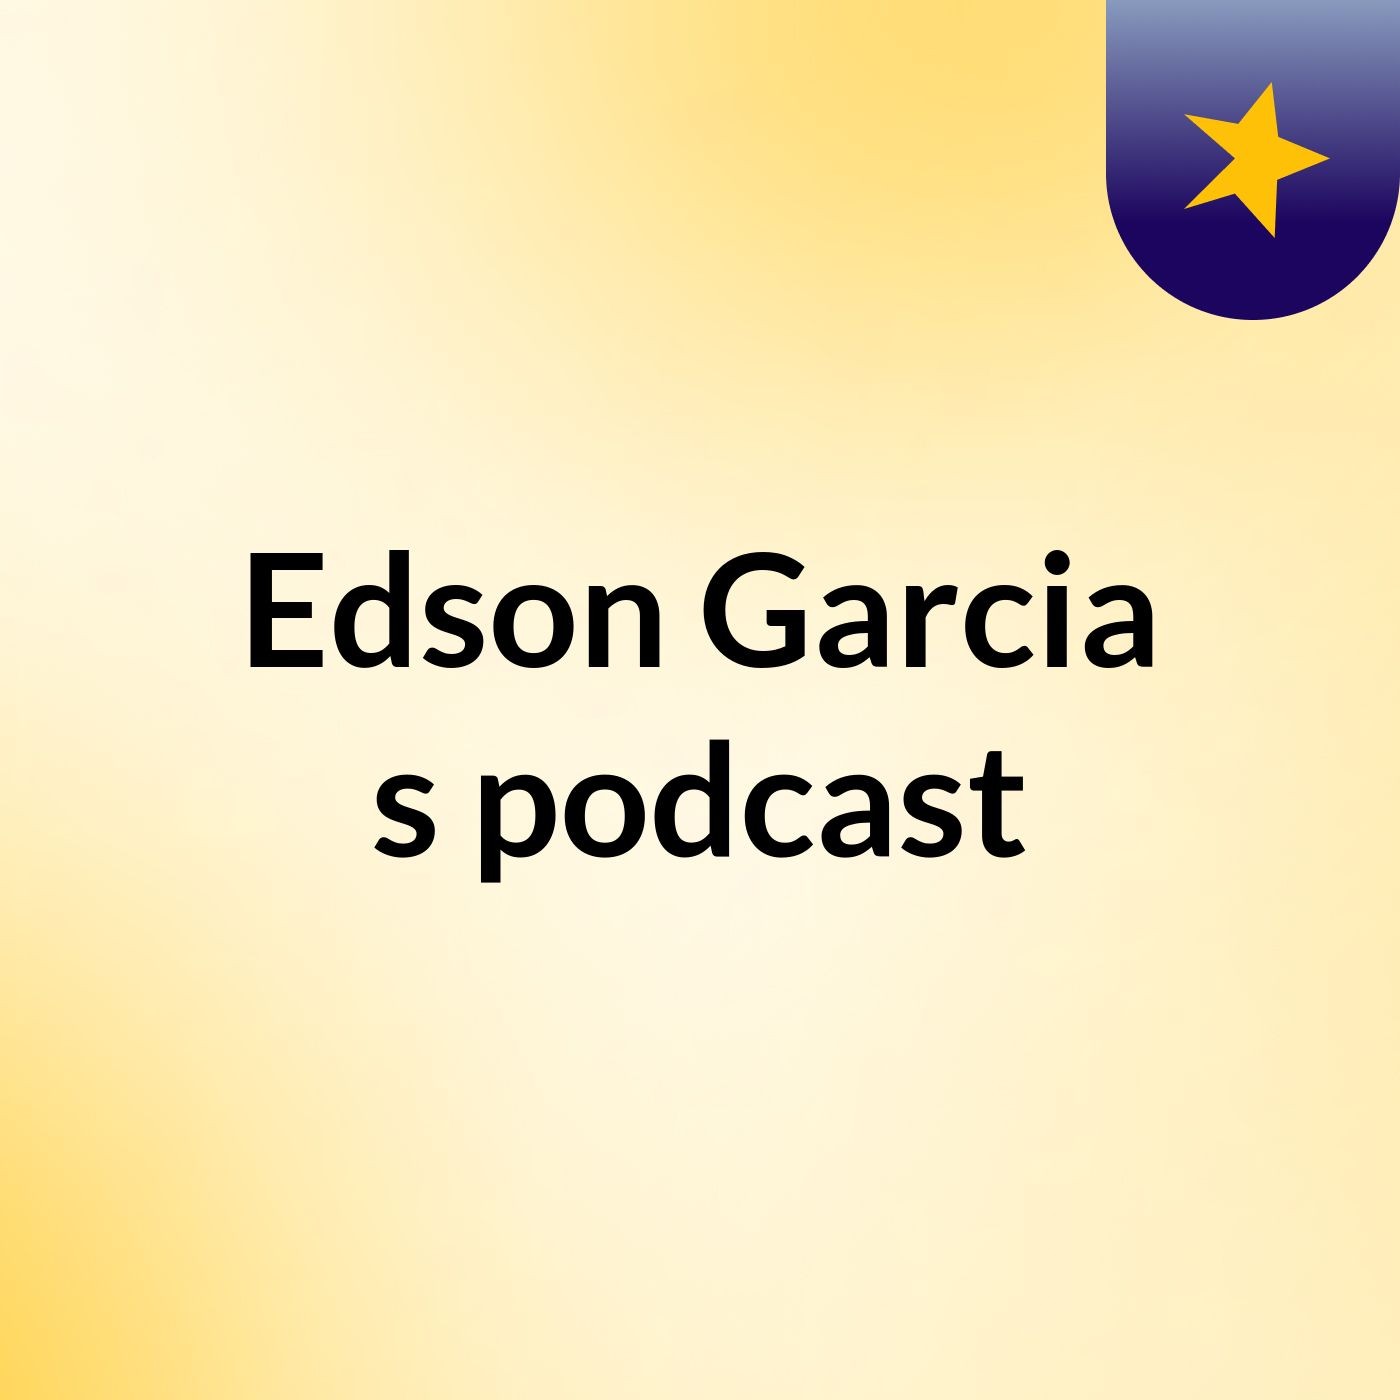 Edson Garcia's podcast